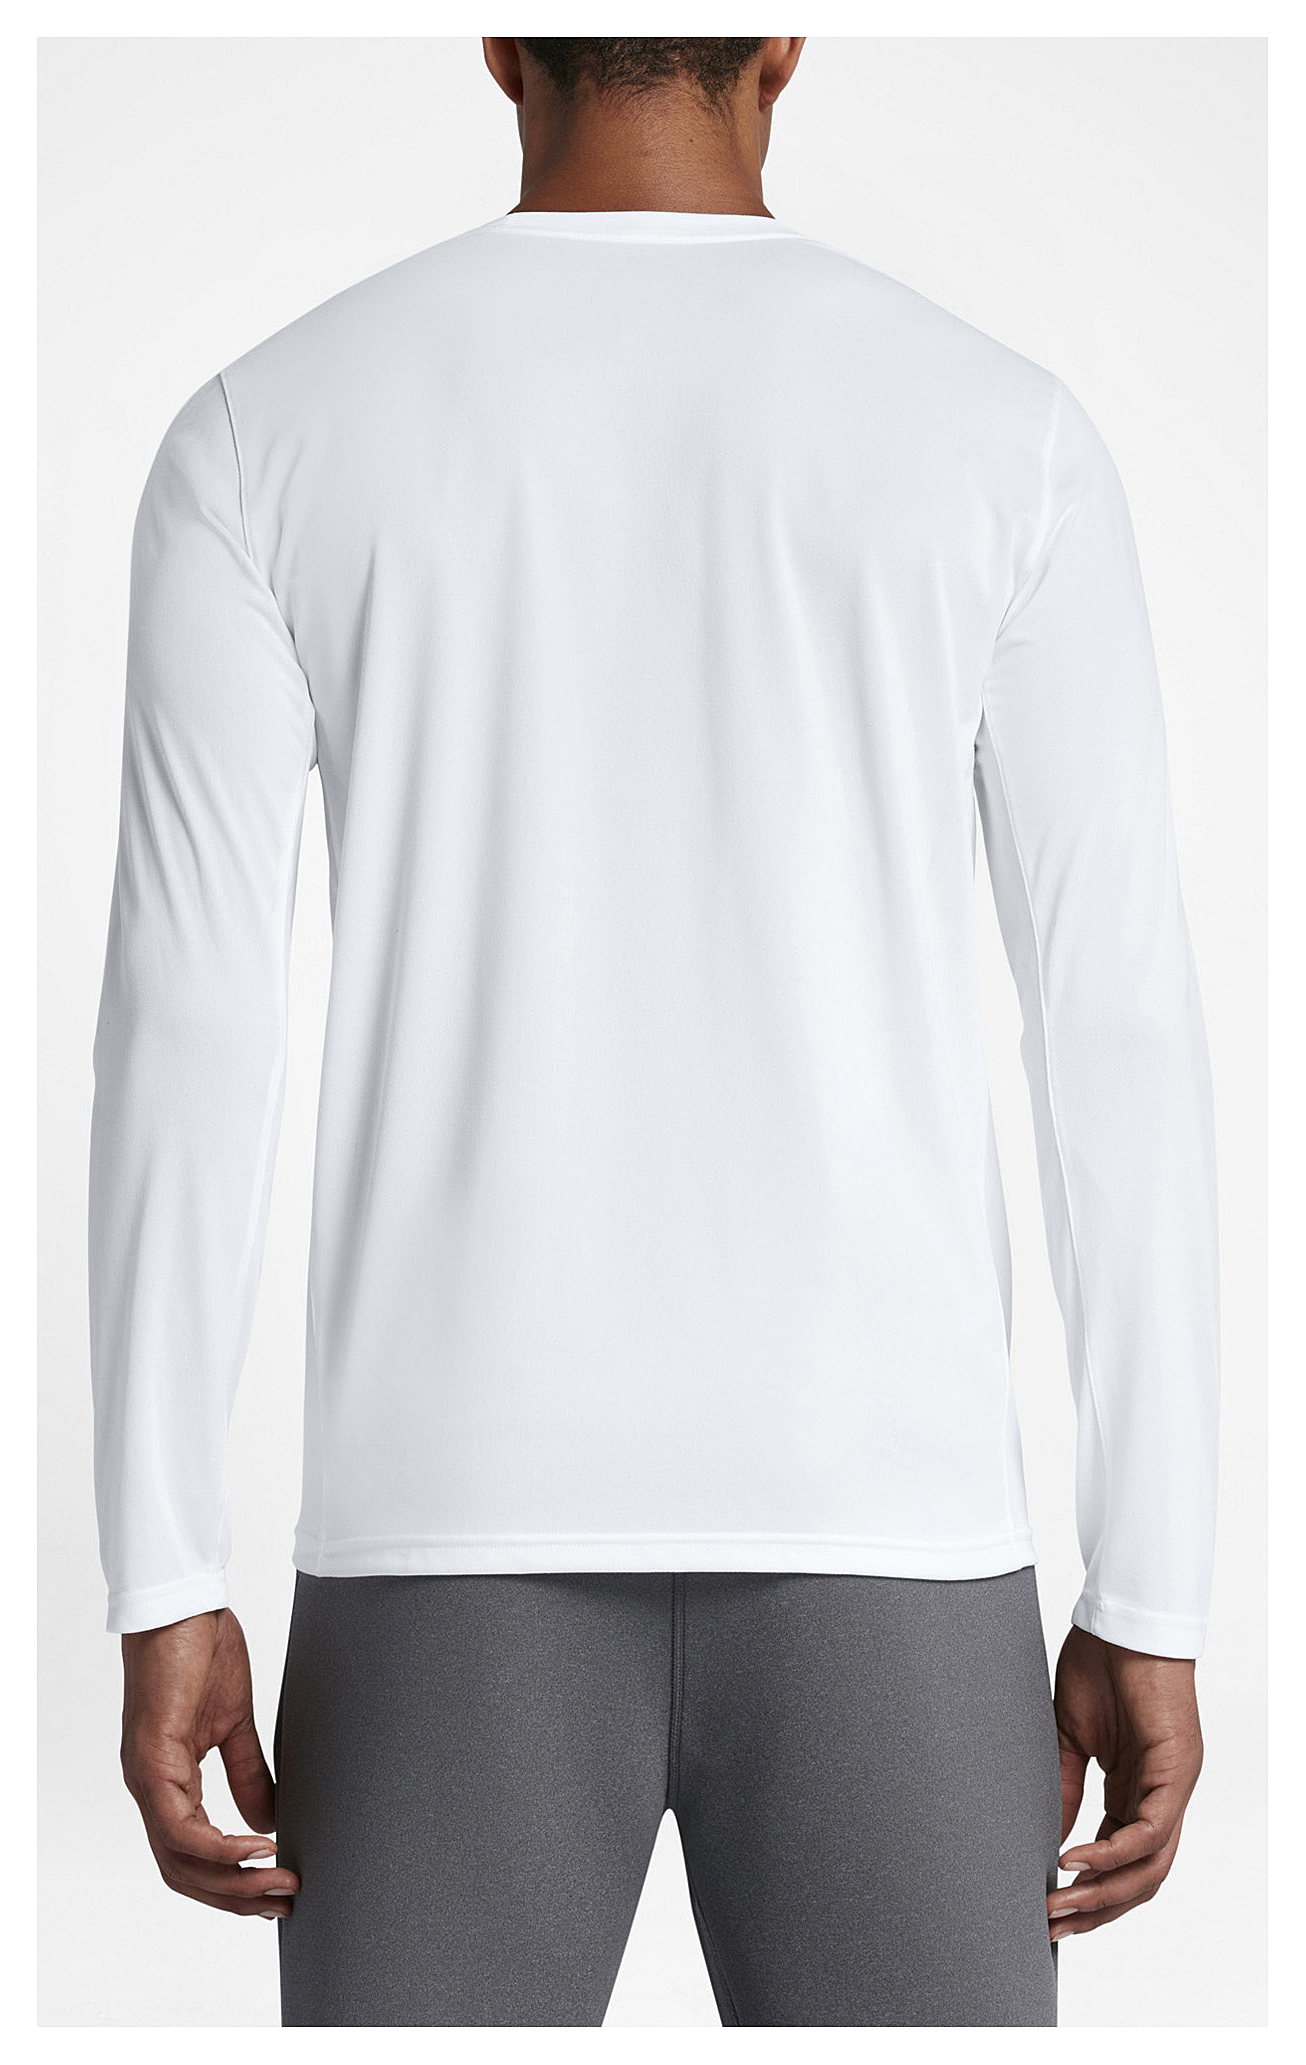 Nike Legend 2.0 Long Sleeve T-Shirt